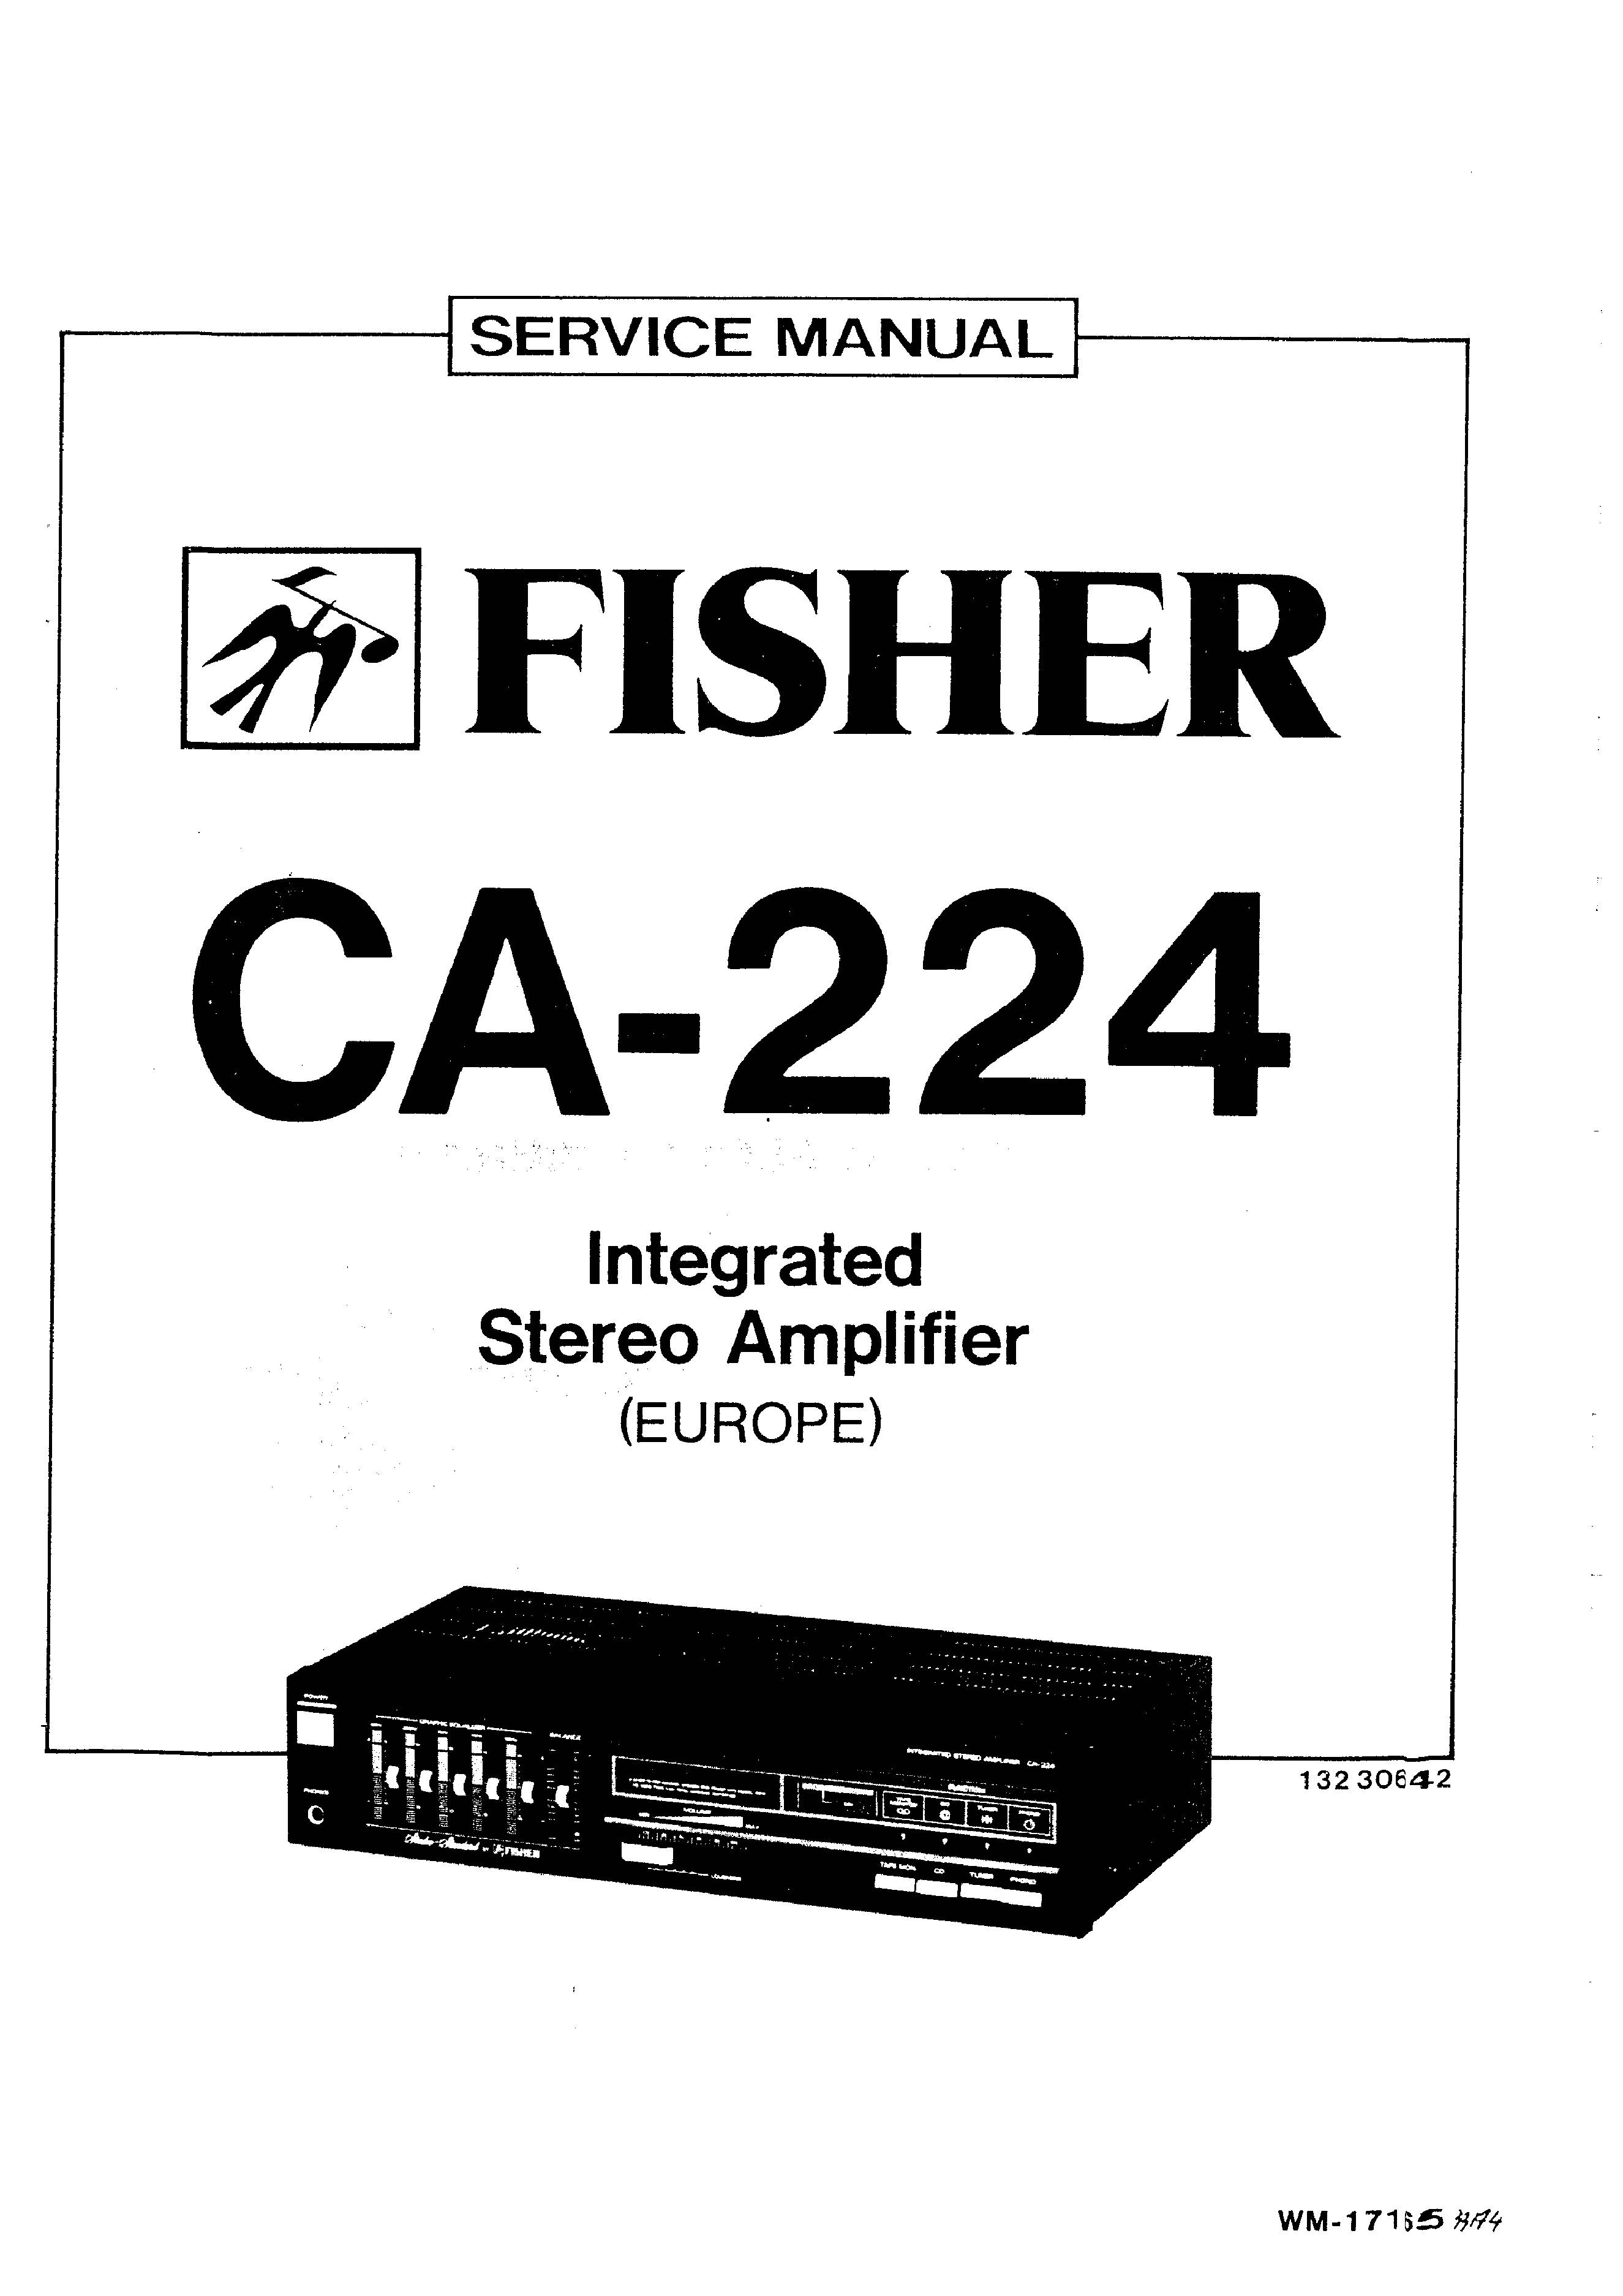 Fisher CA-224